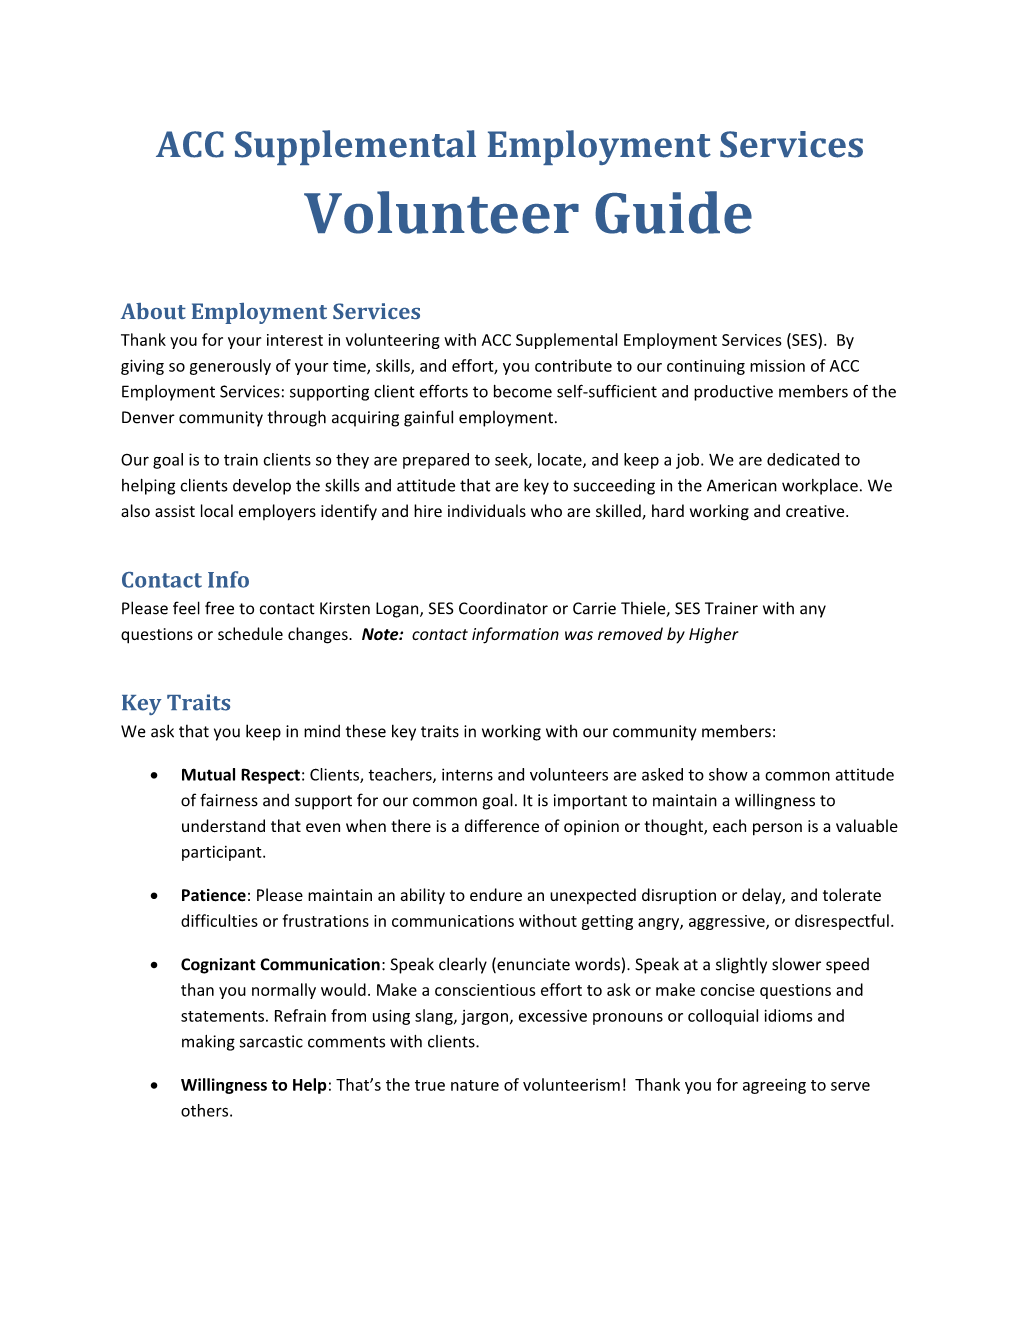 ACC Supplemental Employment Services Volunteer Guide